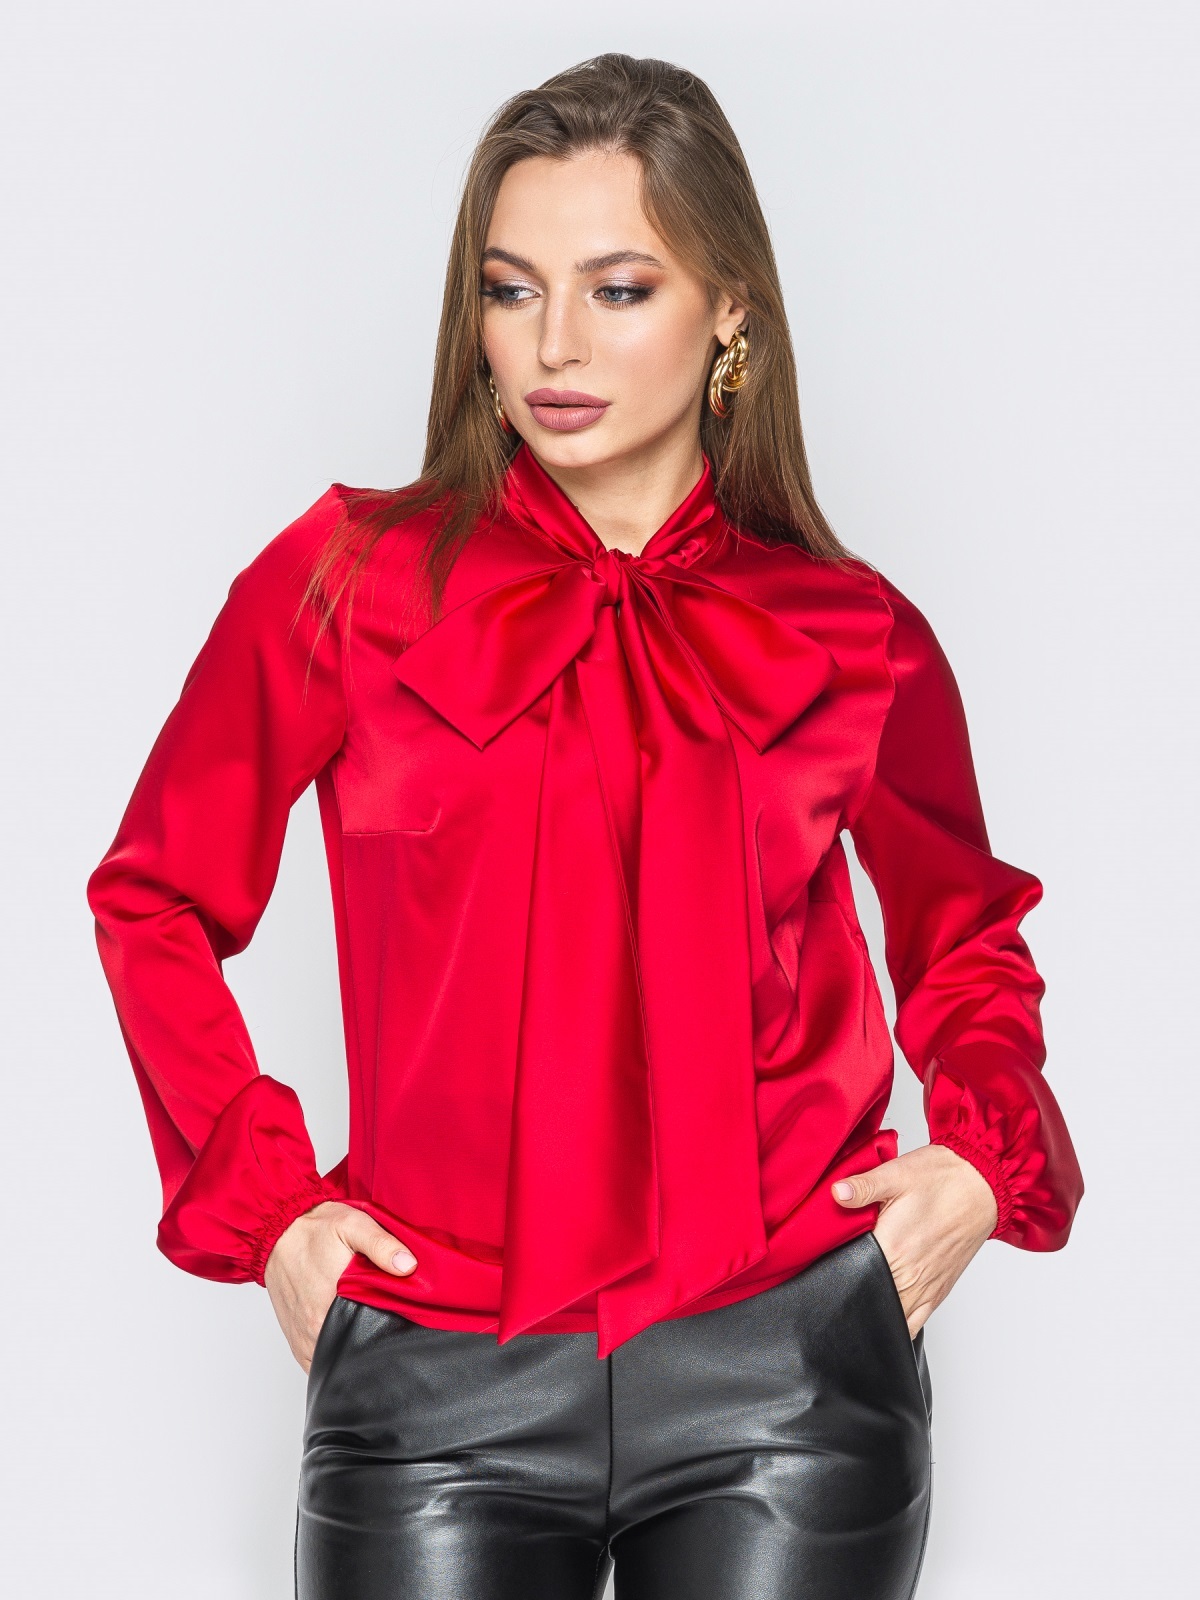 Блузки красного цвета. Красная блузка. Шелковая блузка. Красивая красная блузка. Красная шелковая кофточка.